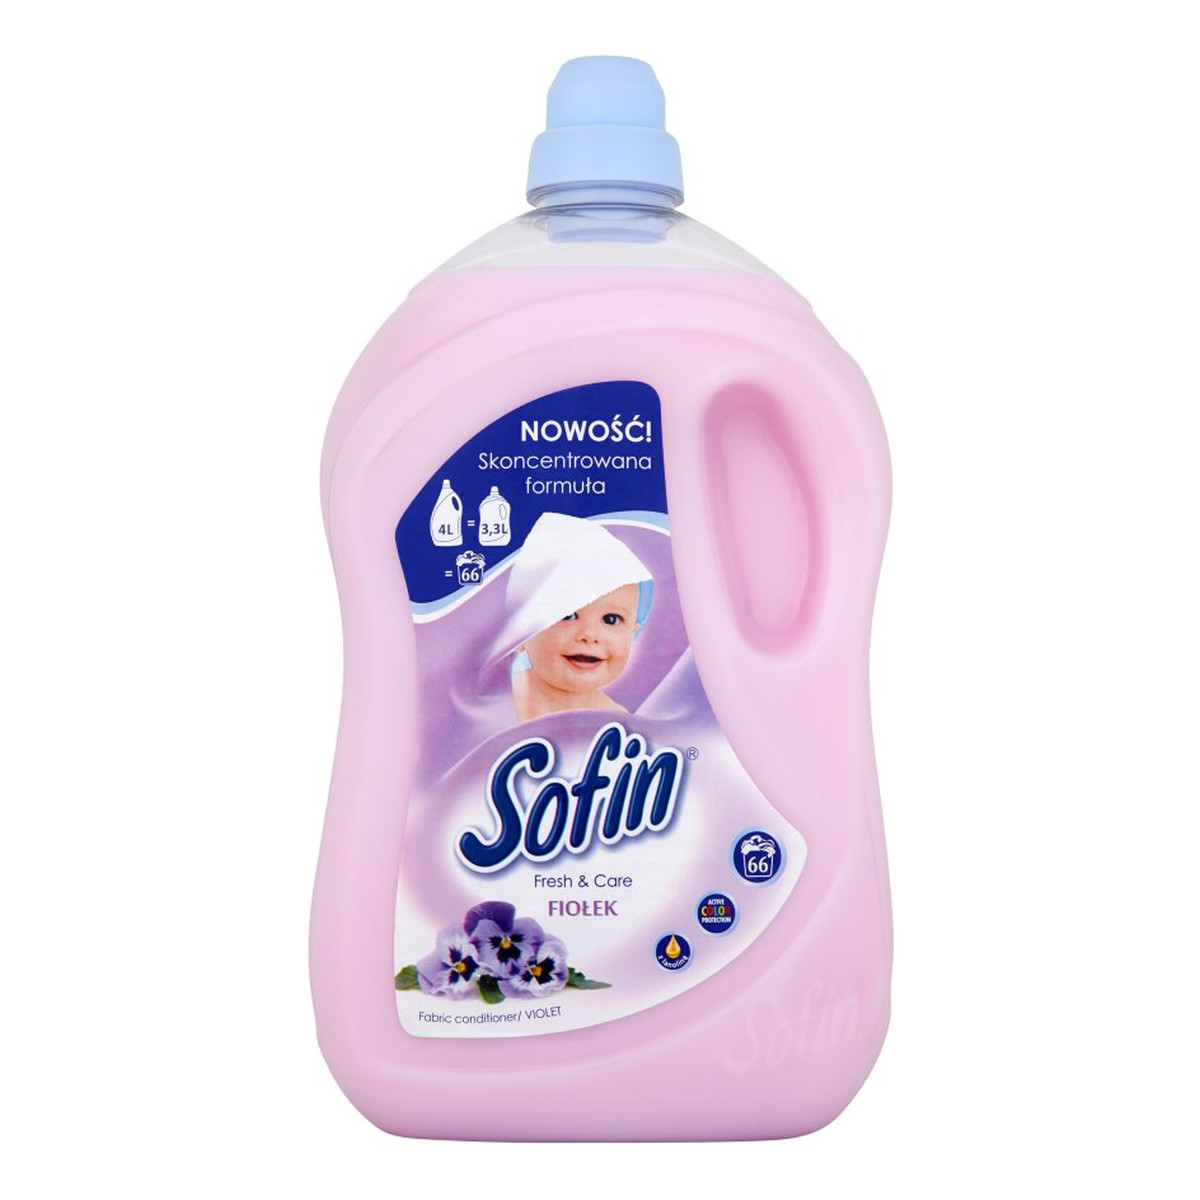 Sofin Fresh & Care Płyn do płukania tkanin fiołek (66 prań) 3l